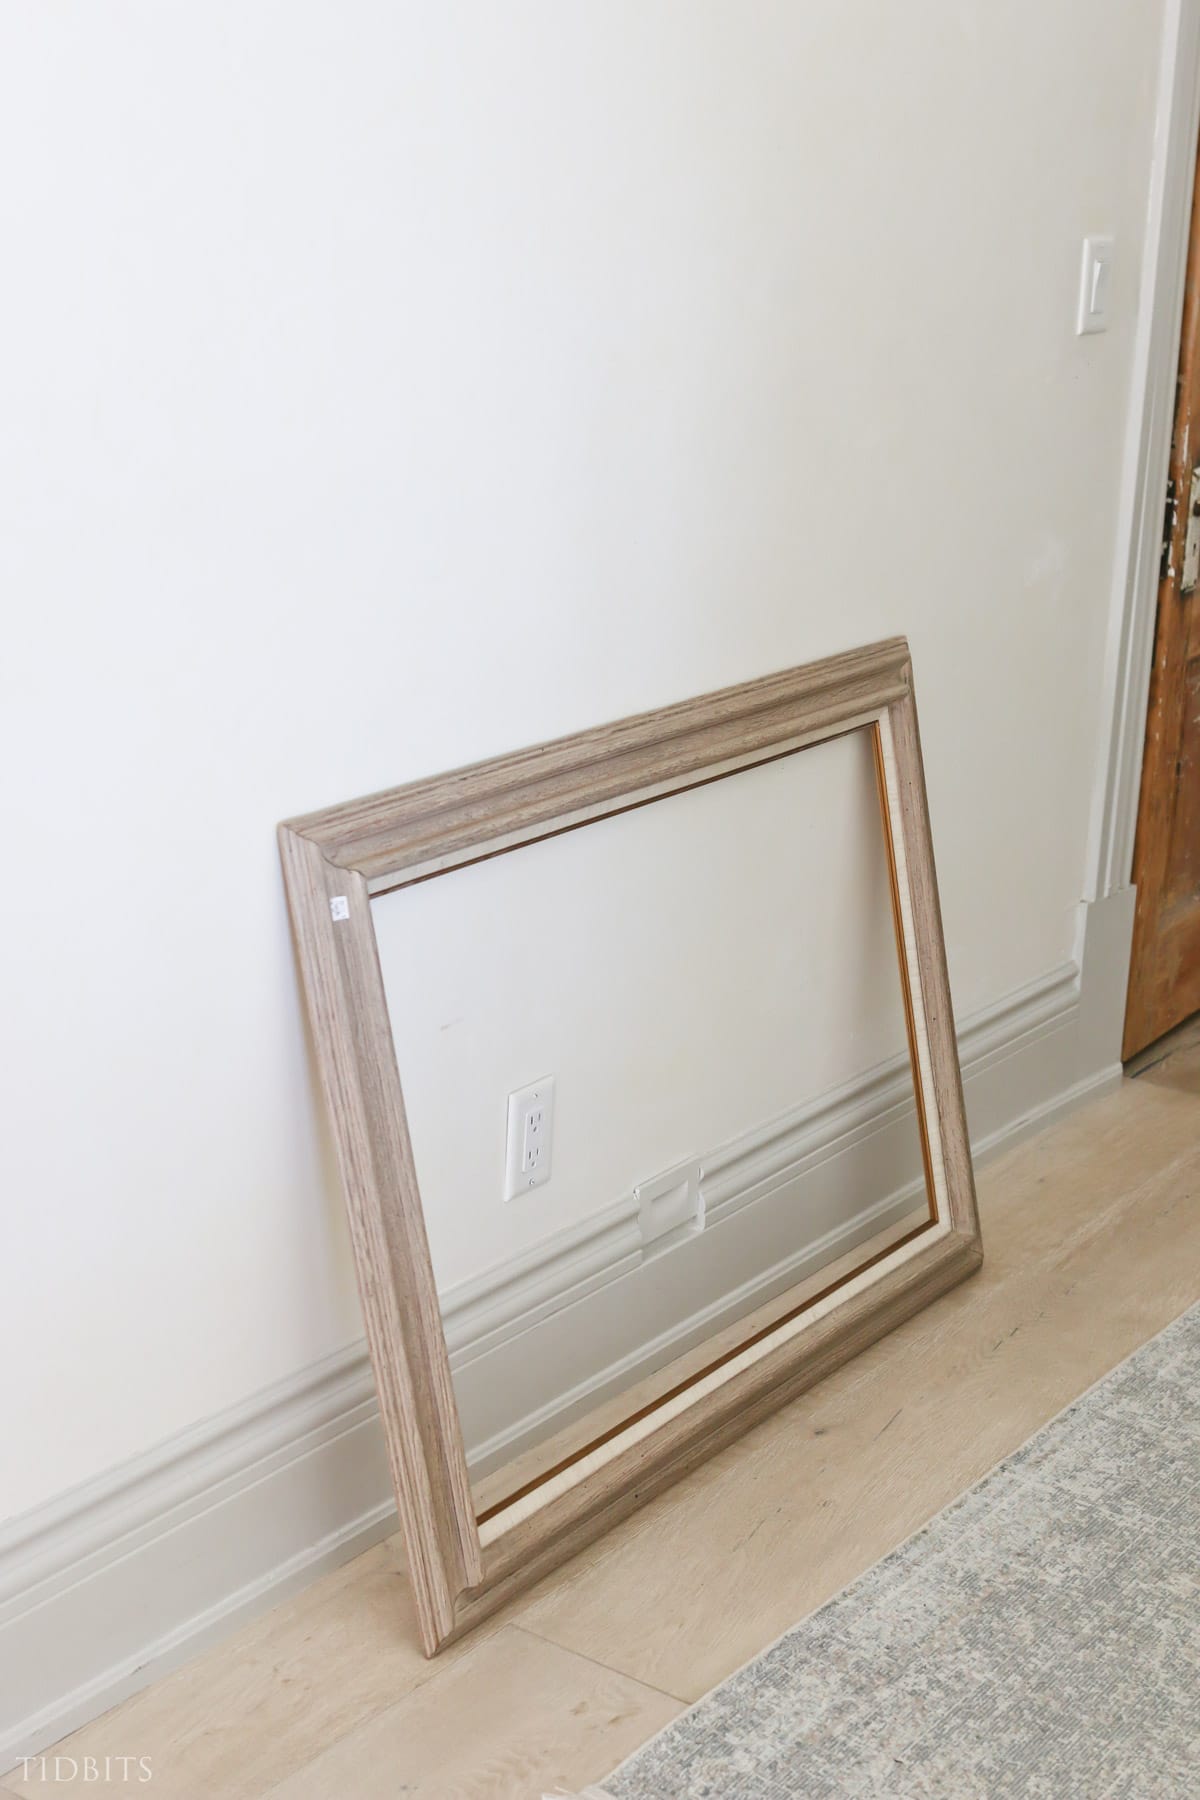 Large, empty art frame sitting on a floor